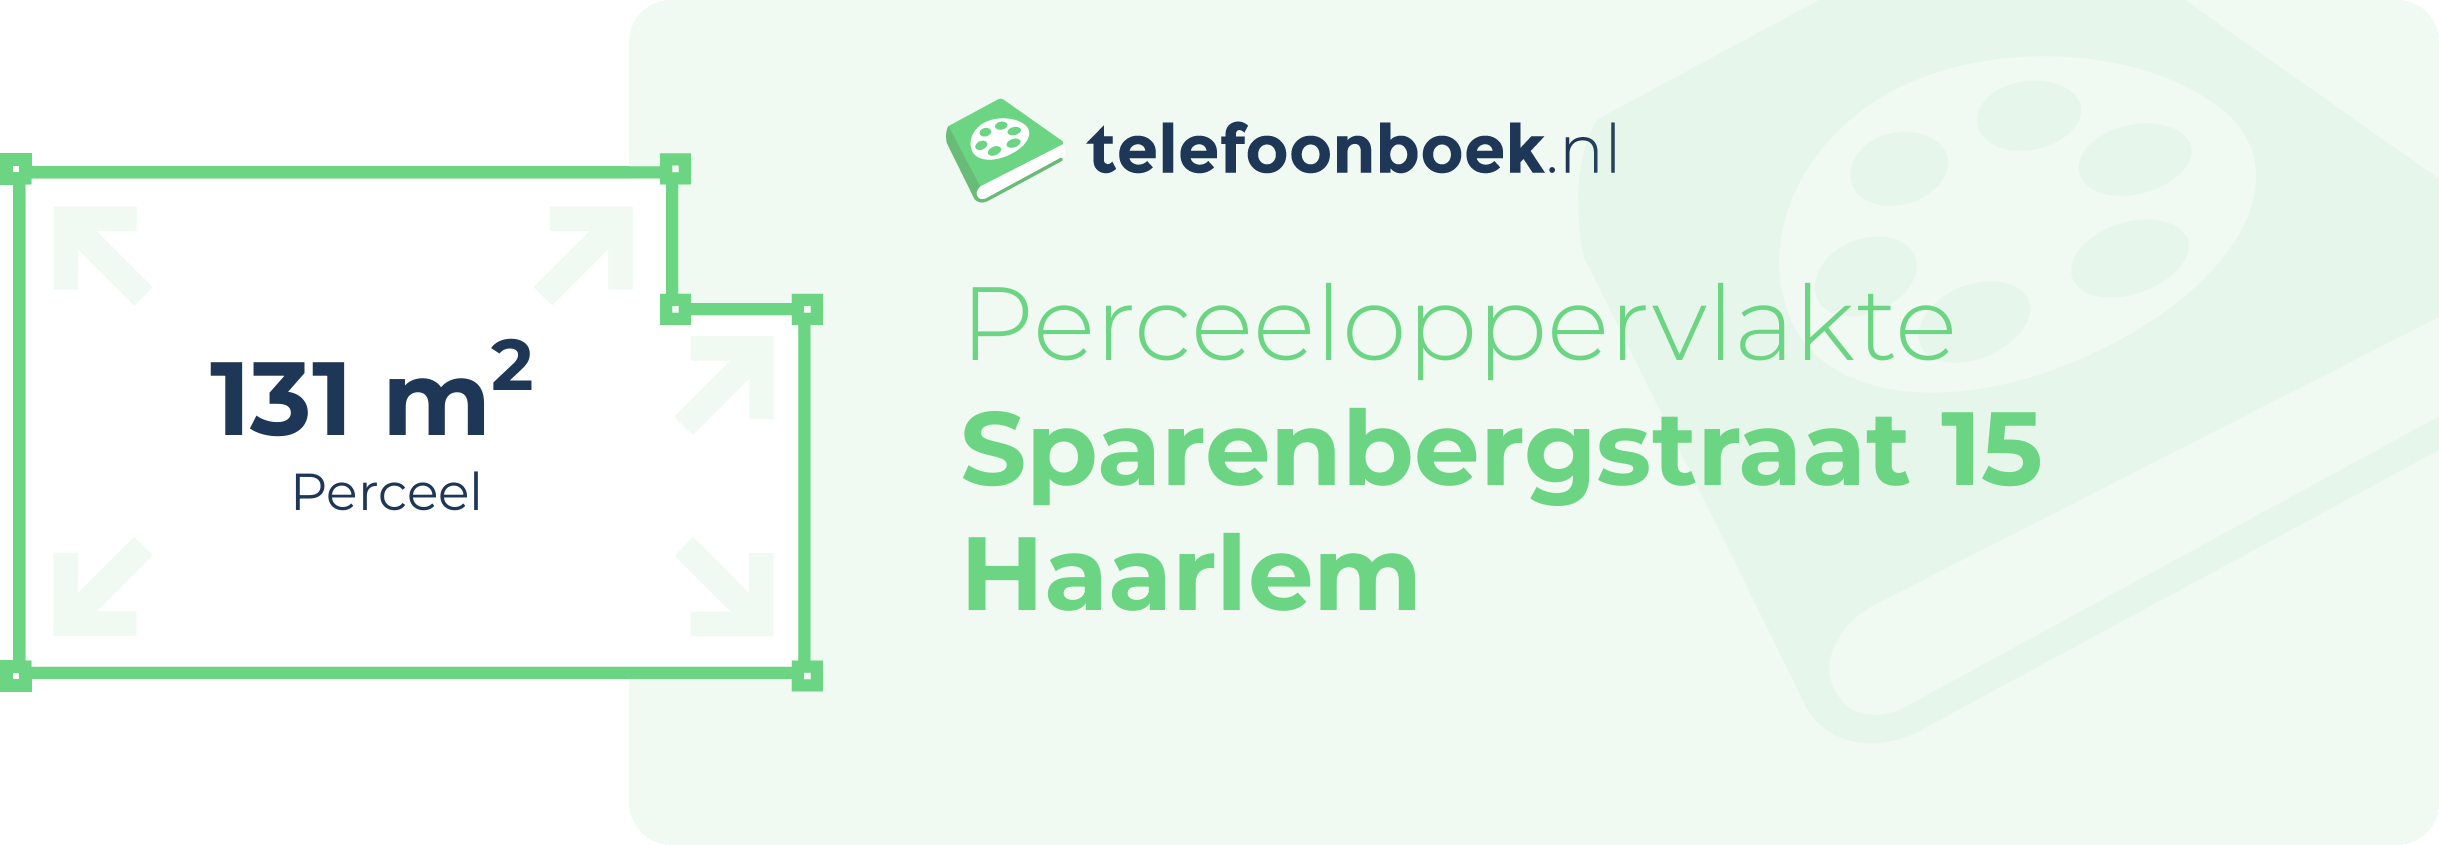 Perceeloppervlakte Sparenbergstraat 15 Haarlem